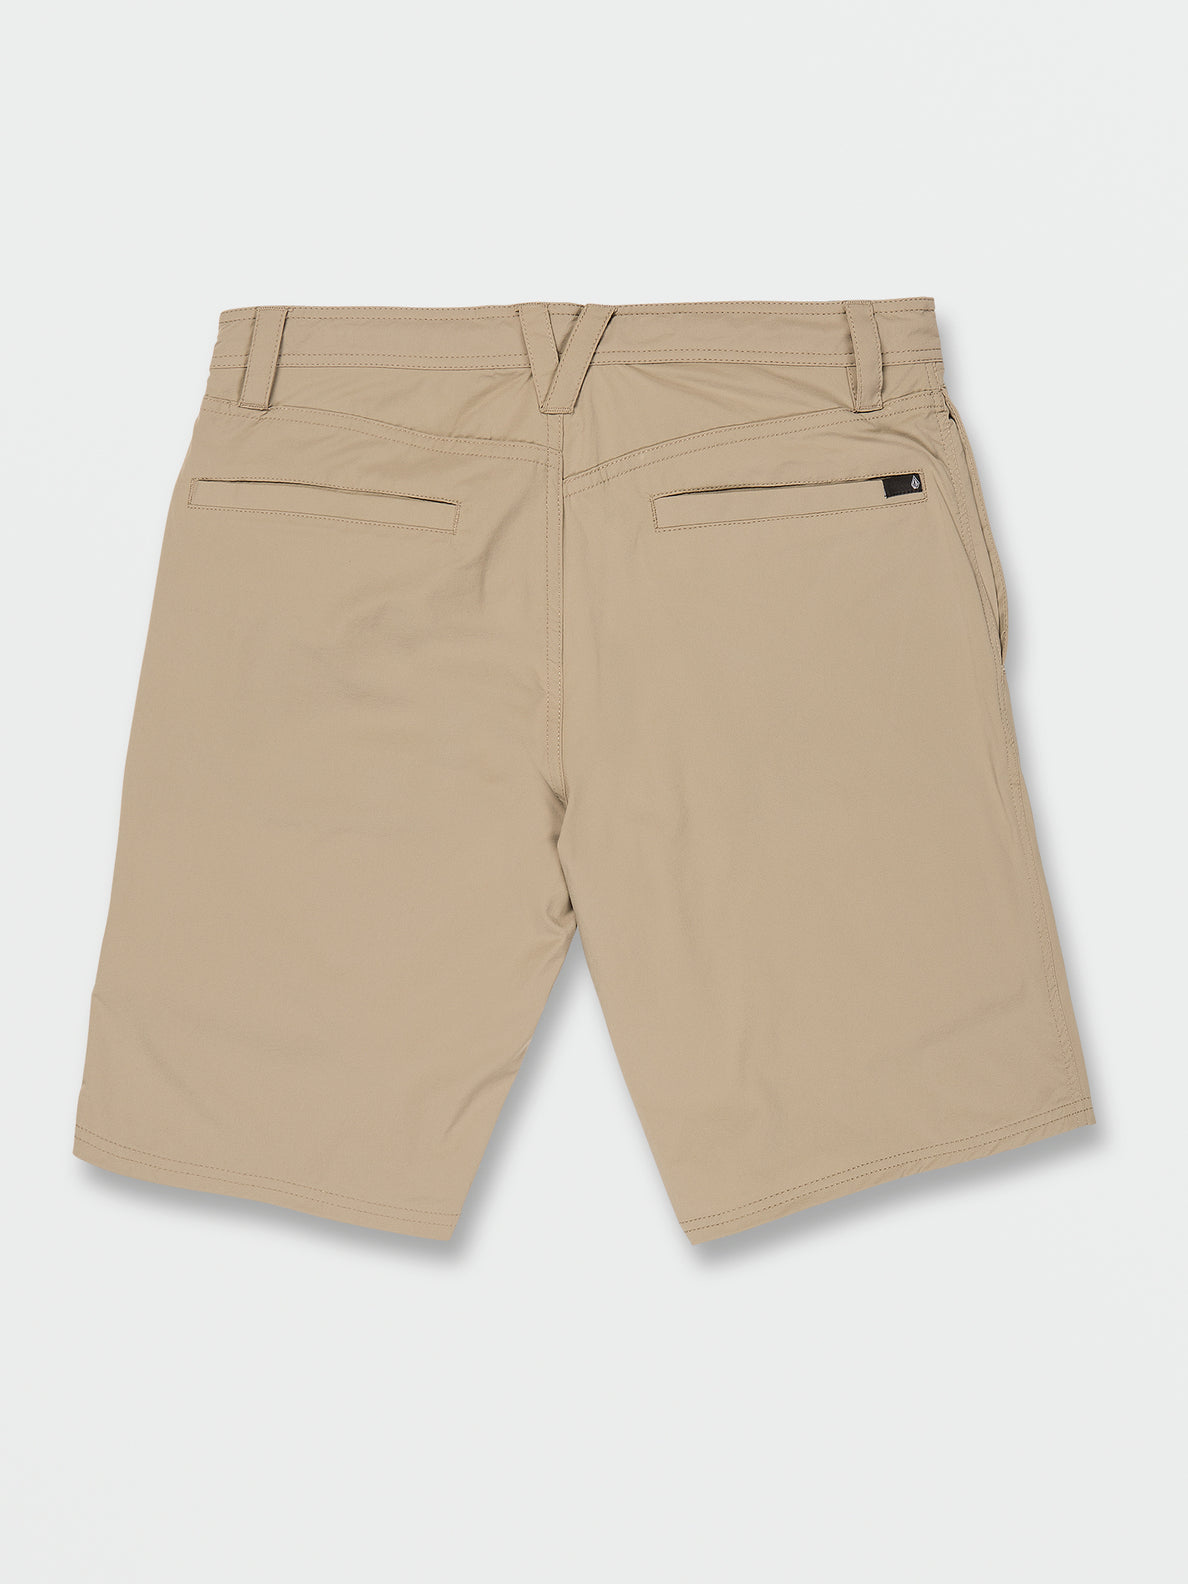 Voltripper Hybrid Shorts - Khaki